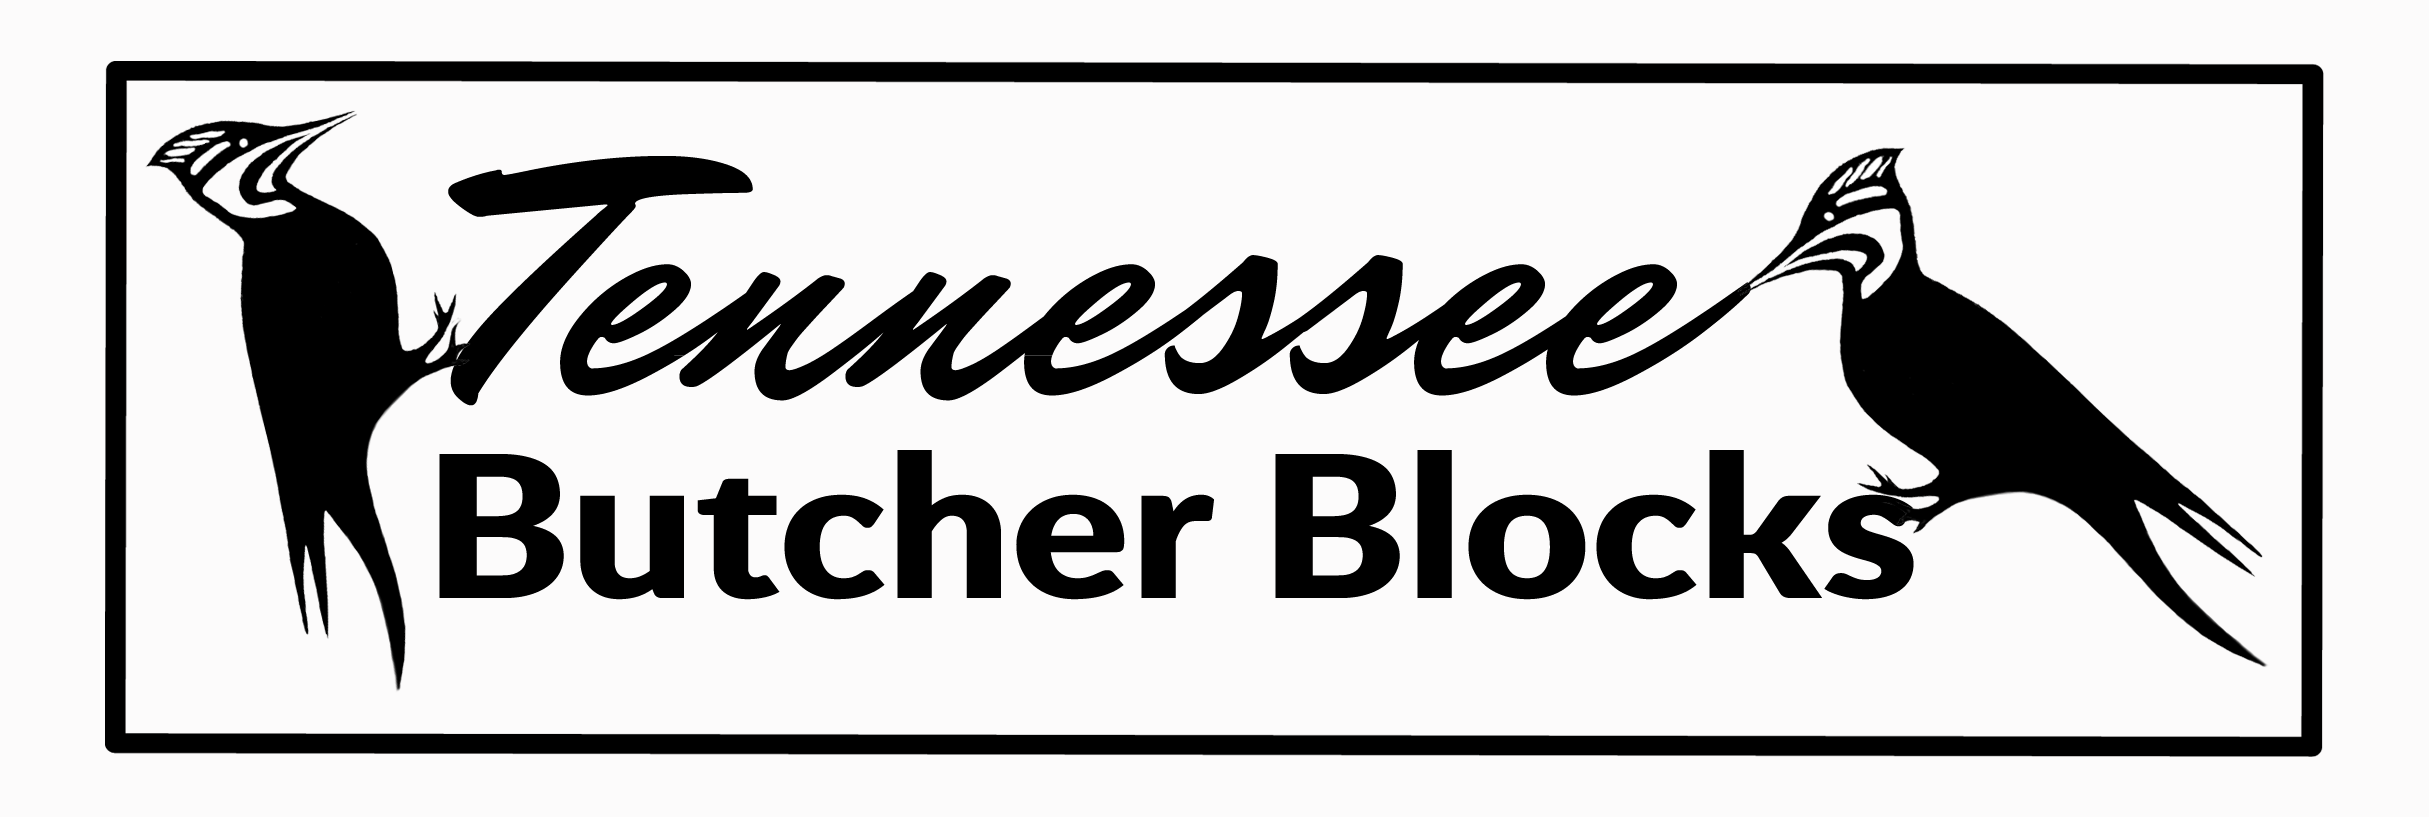 Tennessee Butcher Blocks